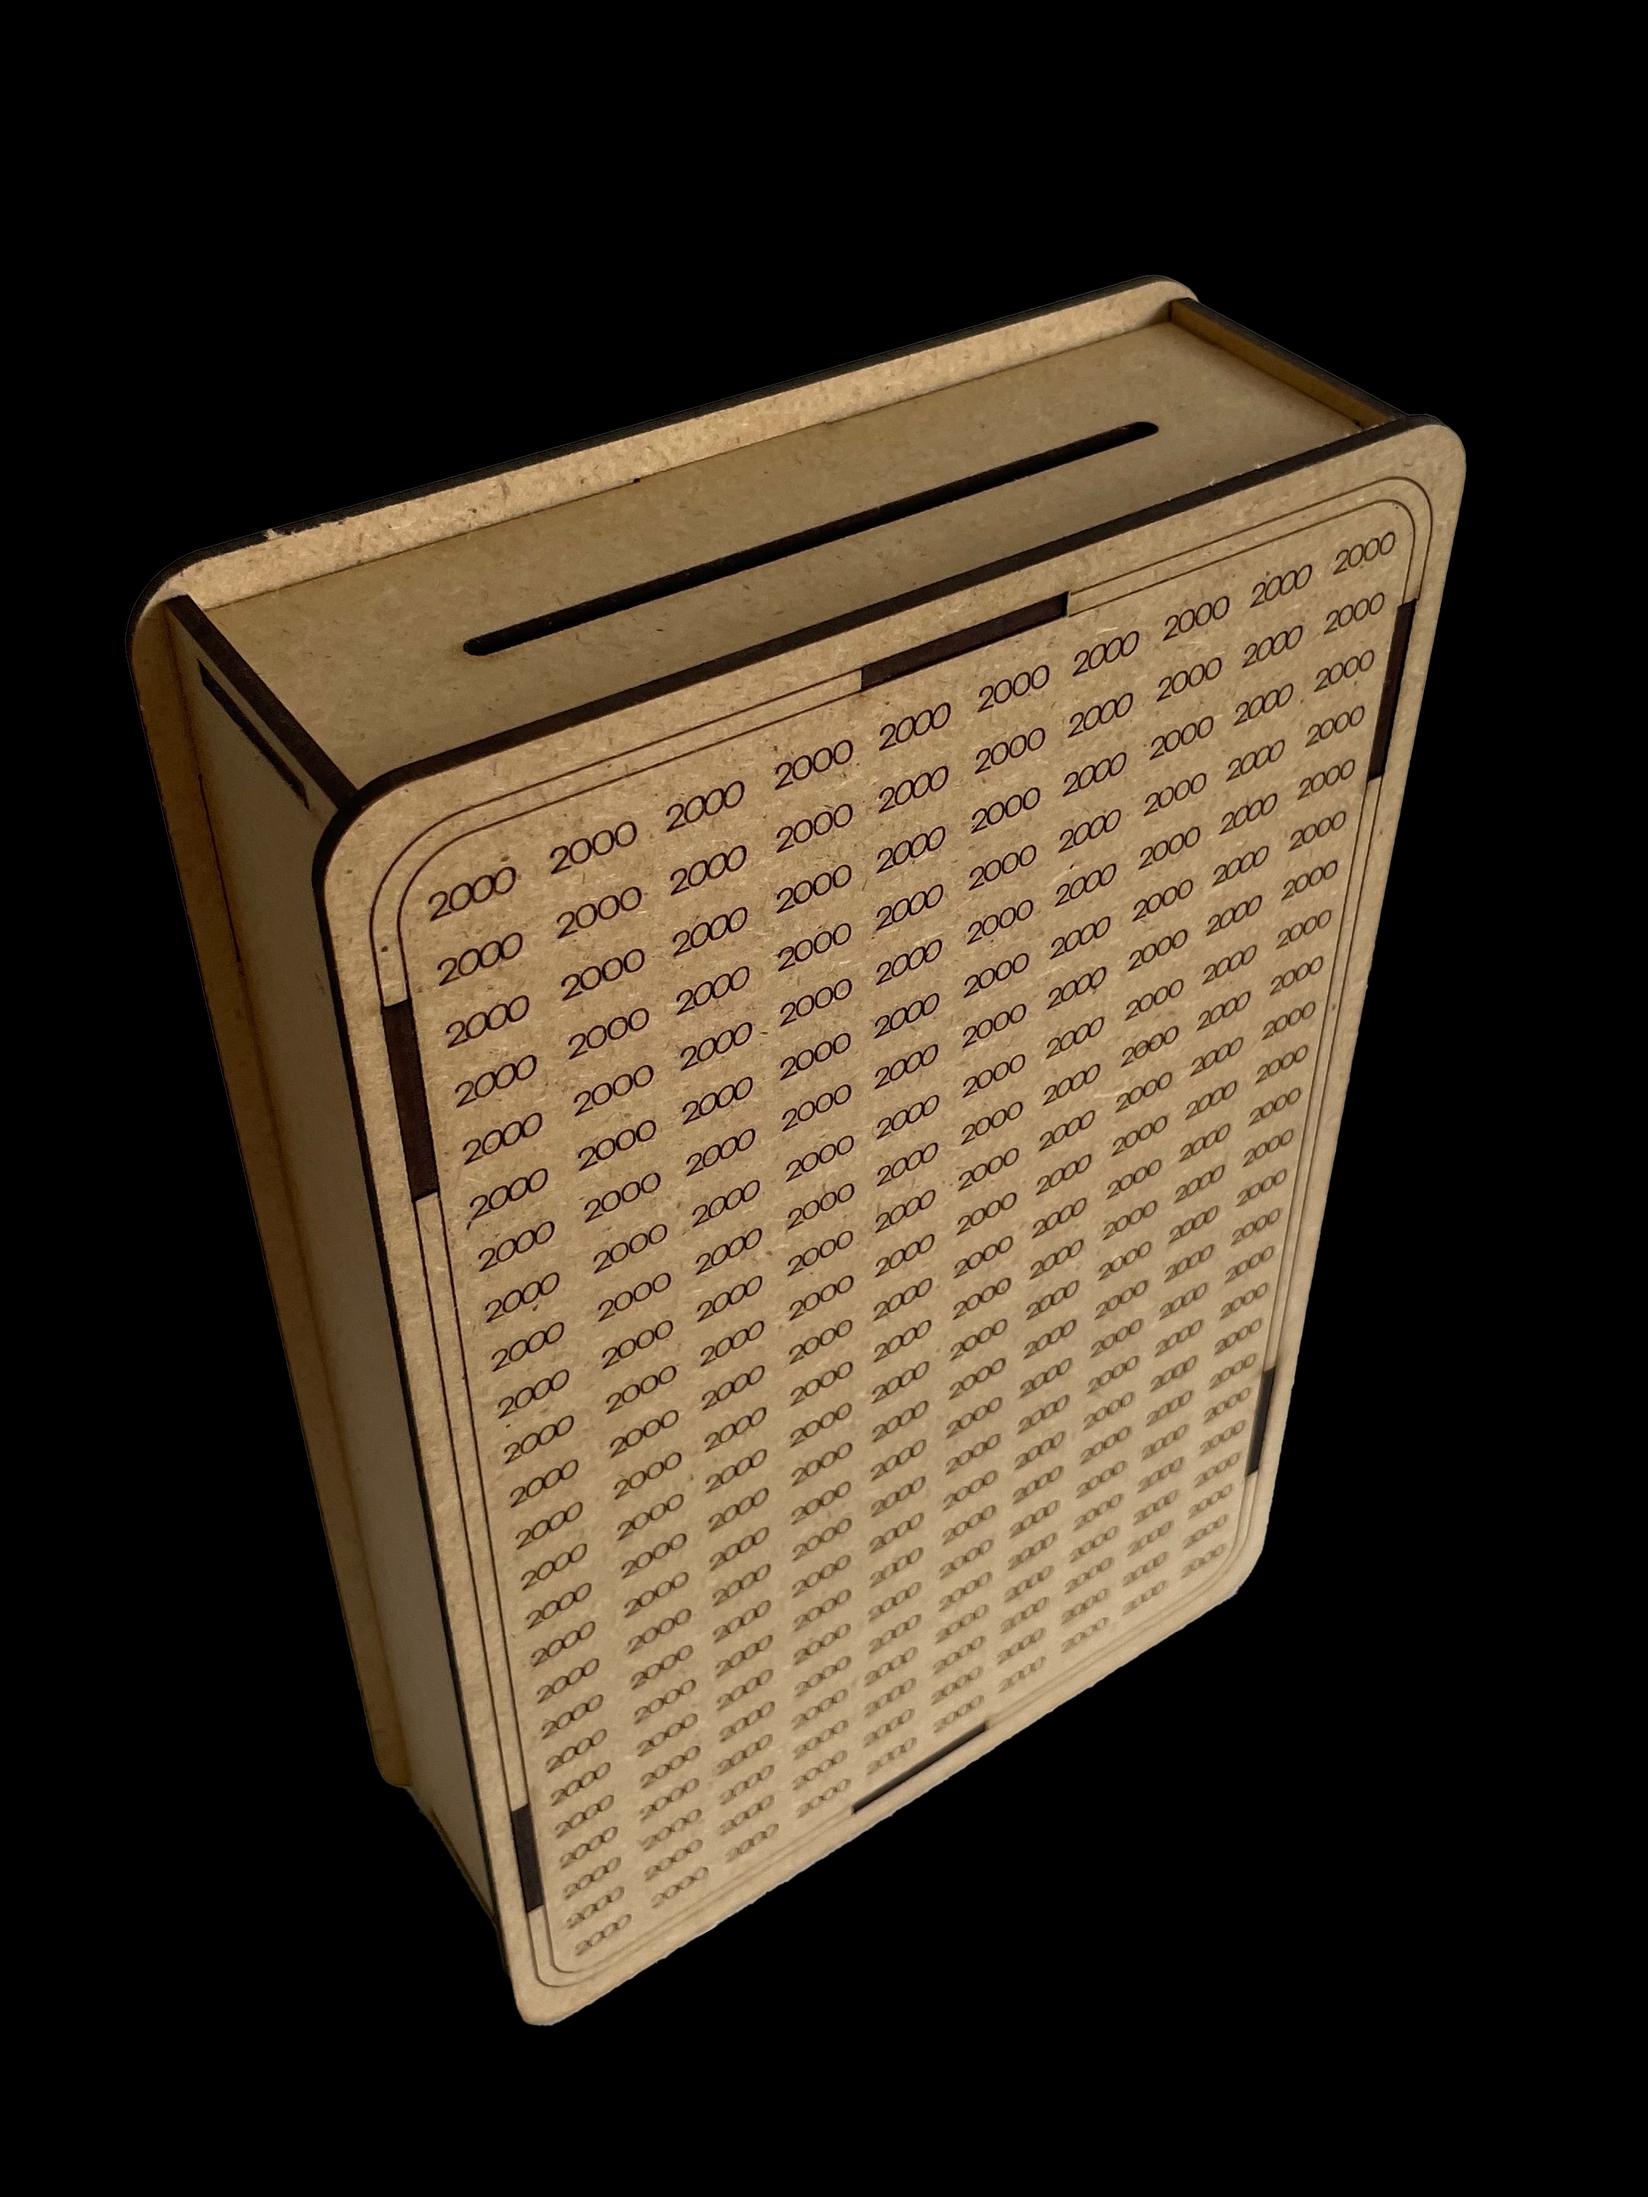 Slike EPIC PRODUCTION Poklon kasica prasica interaktivni izazov 2000 RSD x 250 (500K RSD) smeđa